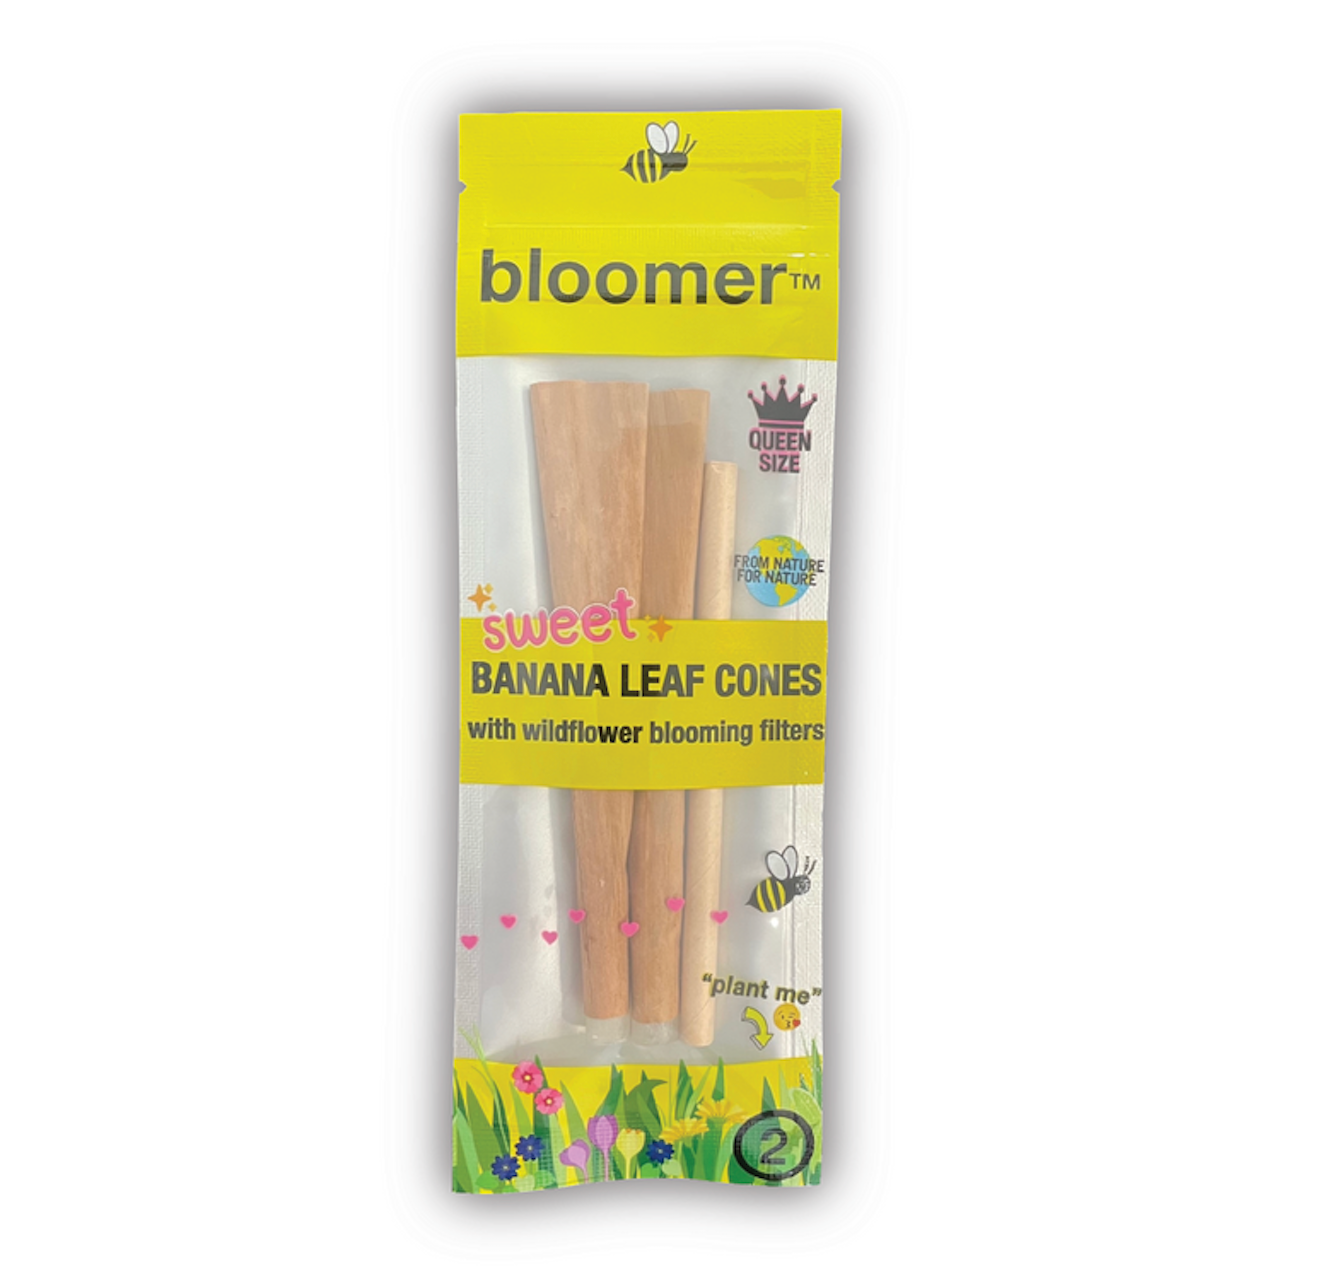 Bloomer™ Sweet Banana Leaf Cones